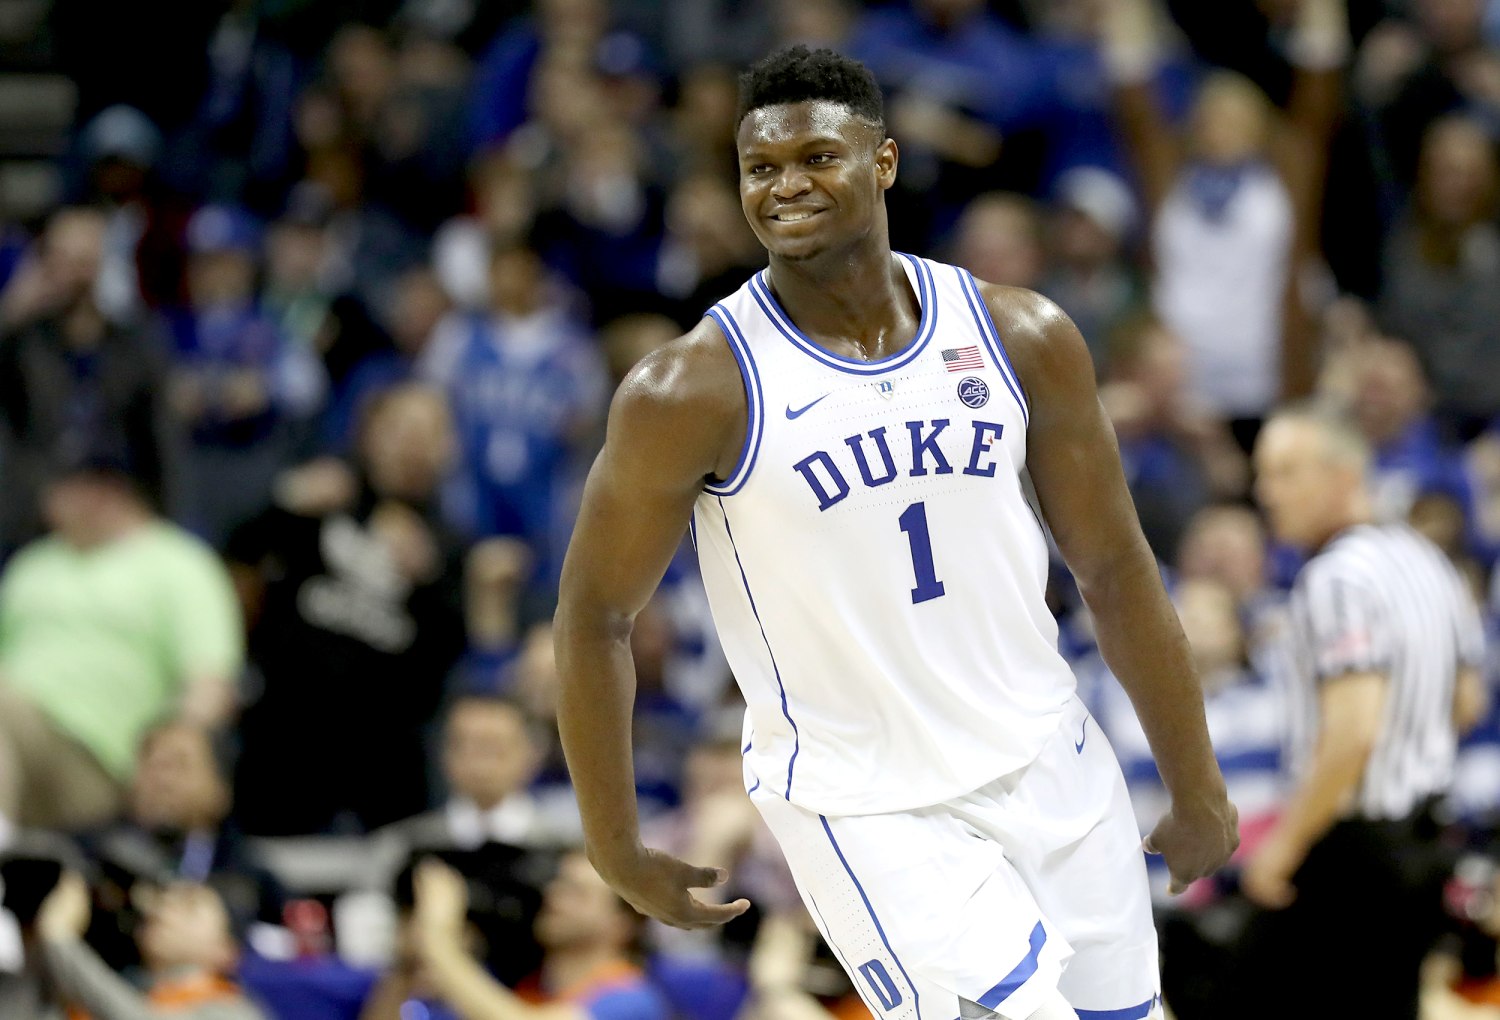 Could Duke's Zion Williamson Earn $1 Billion In His Basketball Career?